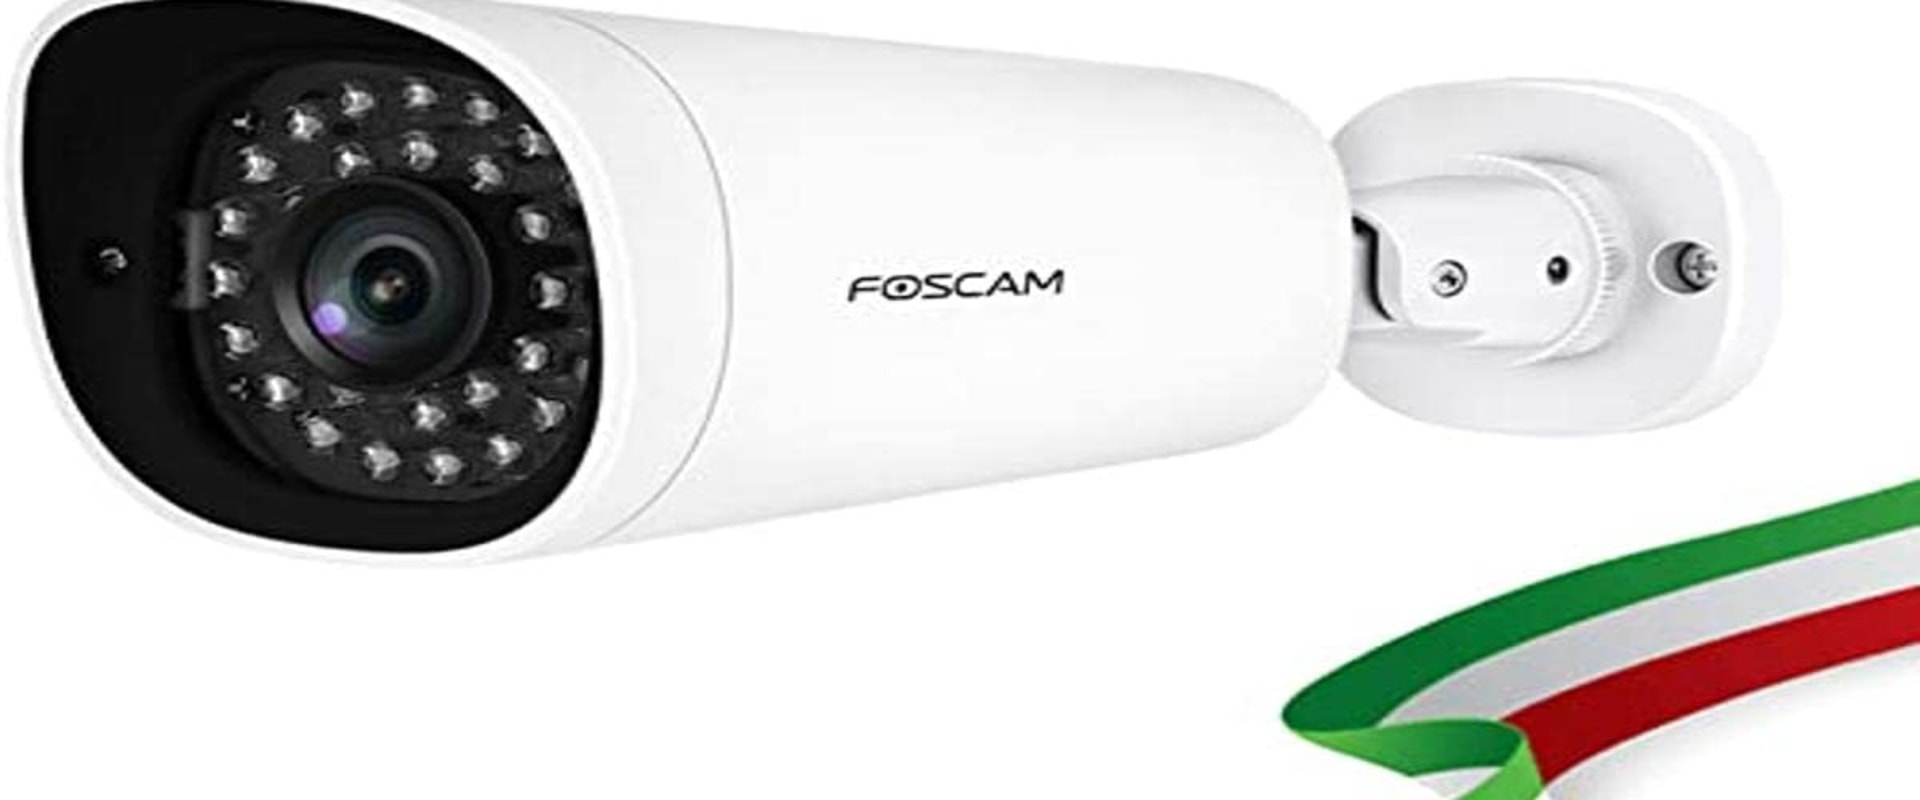 Weatherproof Webcams: A Comprehensive Overview